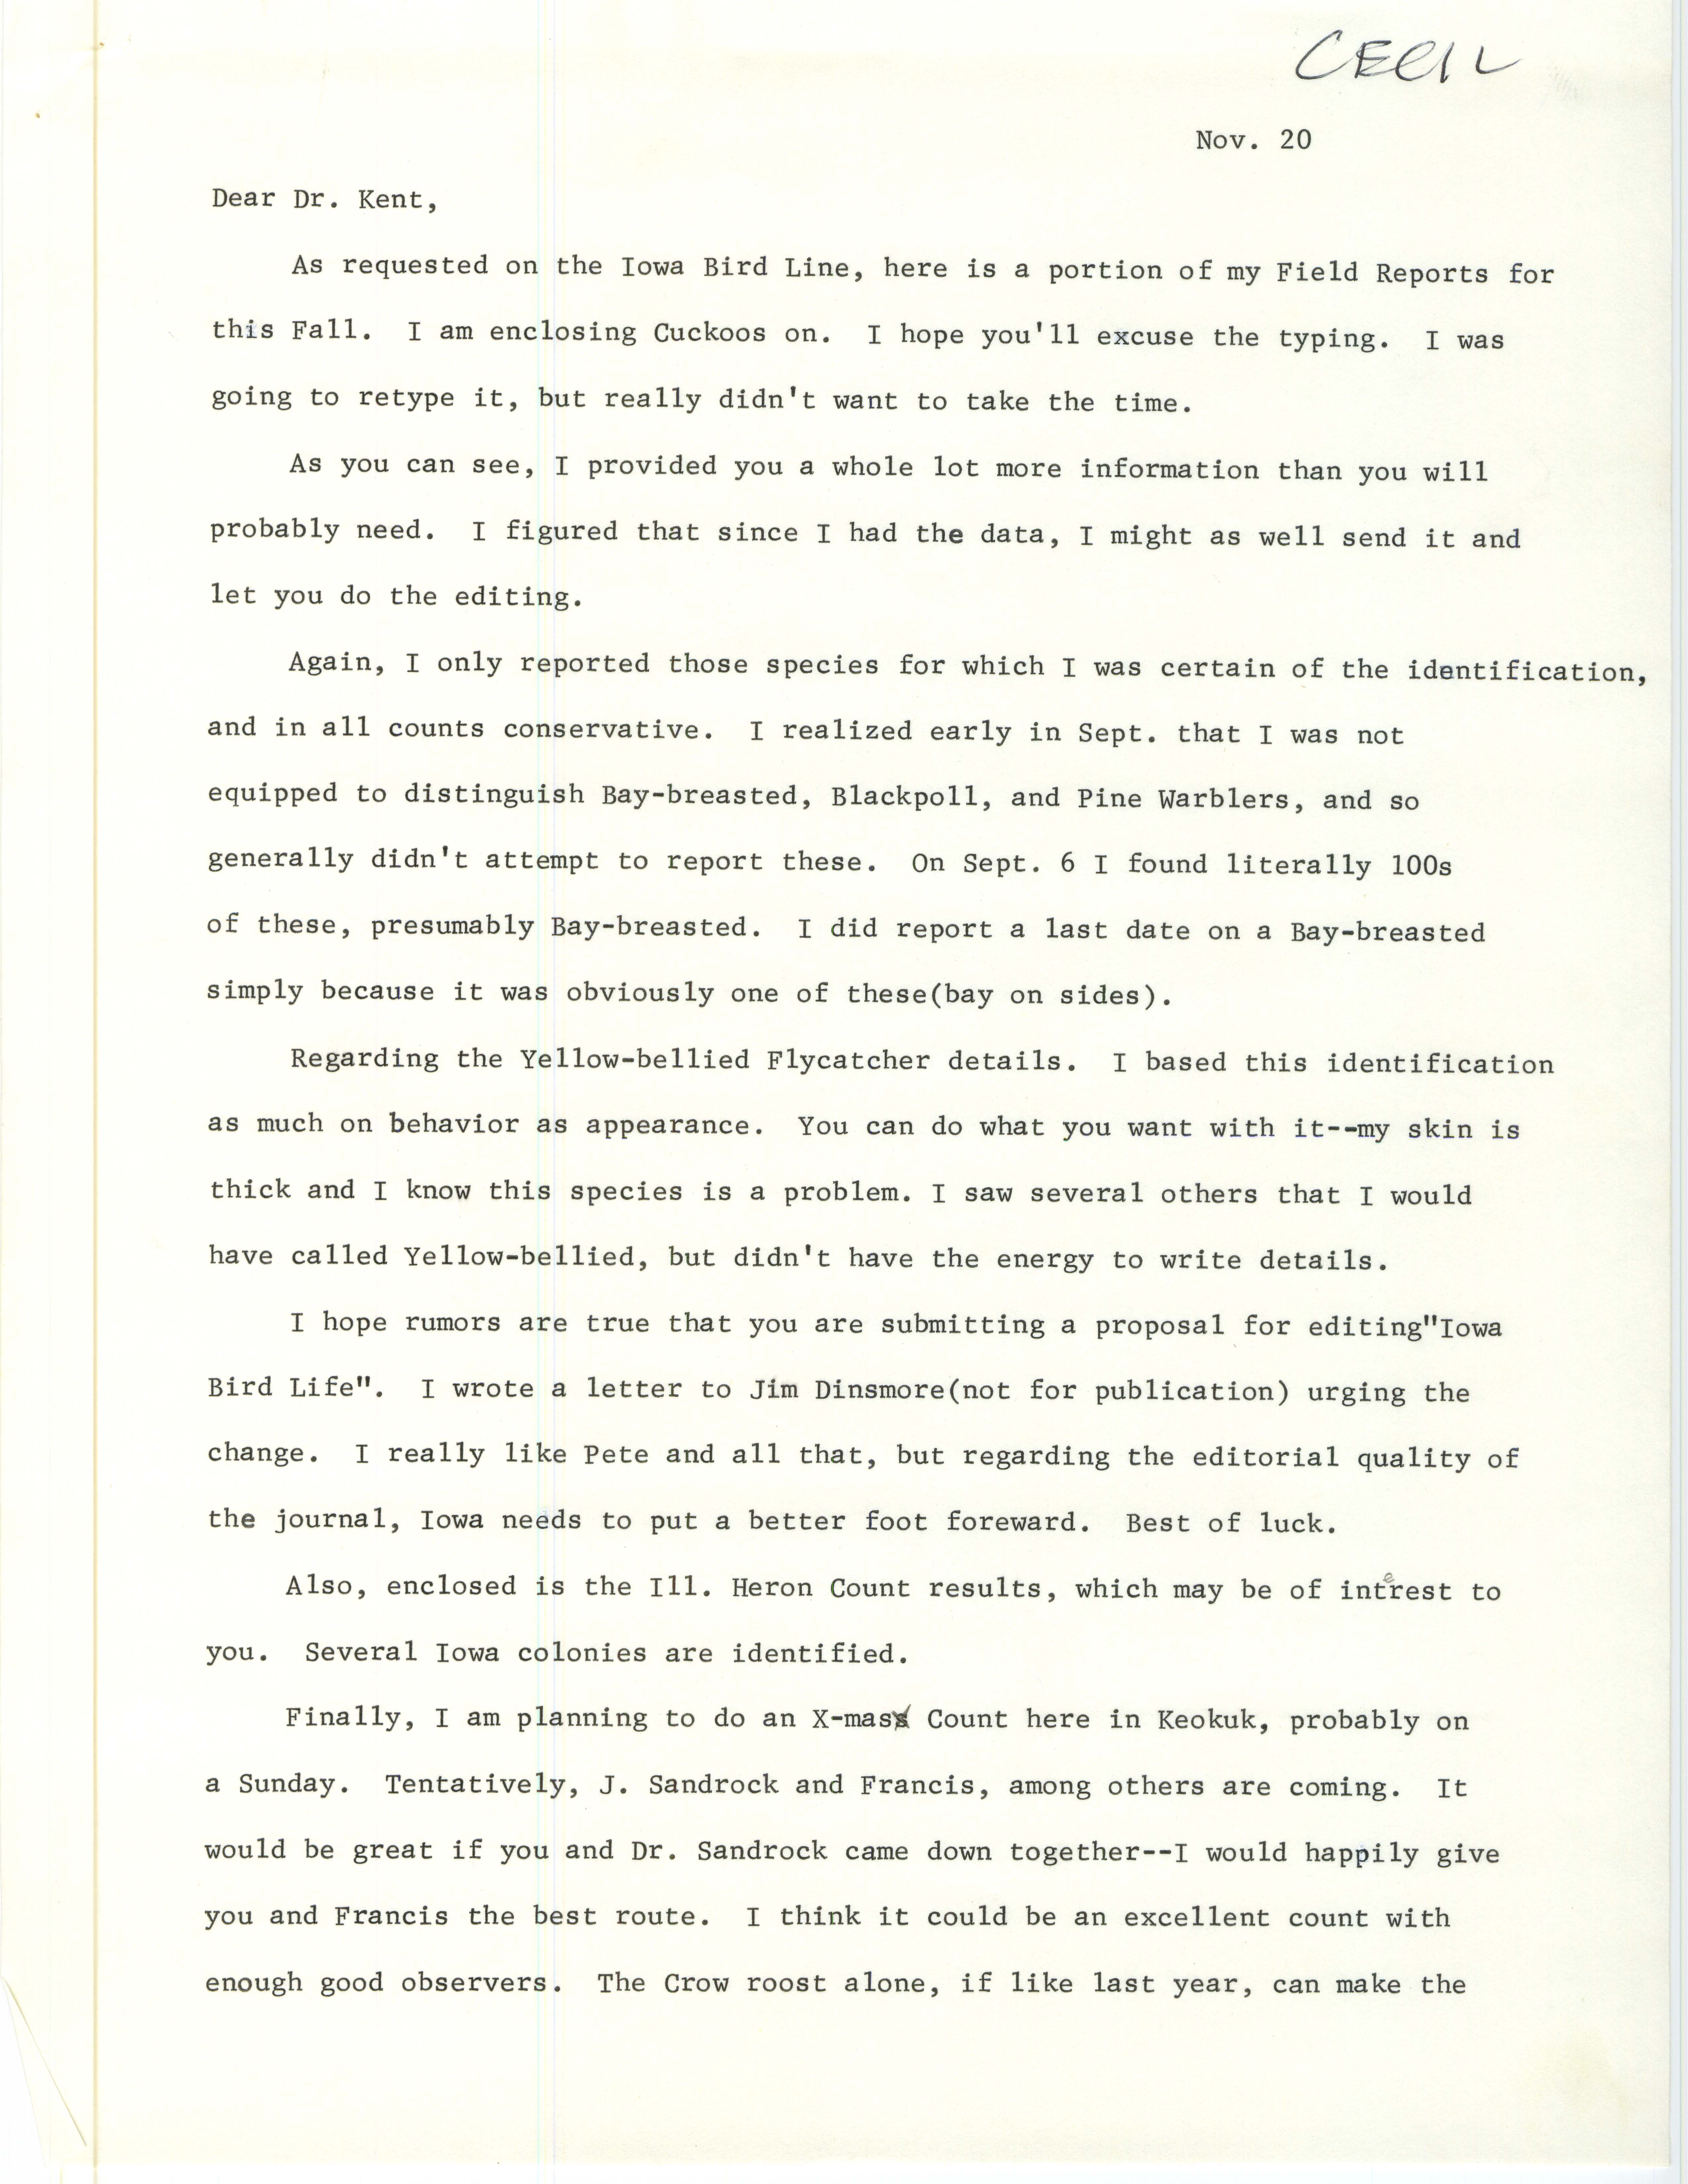 Robert Cecil letter to Thomas Kent regarding Fall bird sightings, November 20, 1985